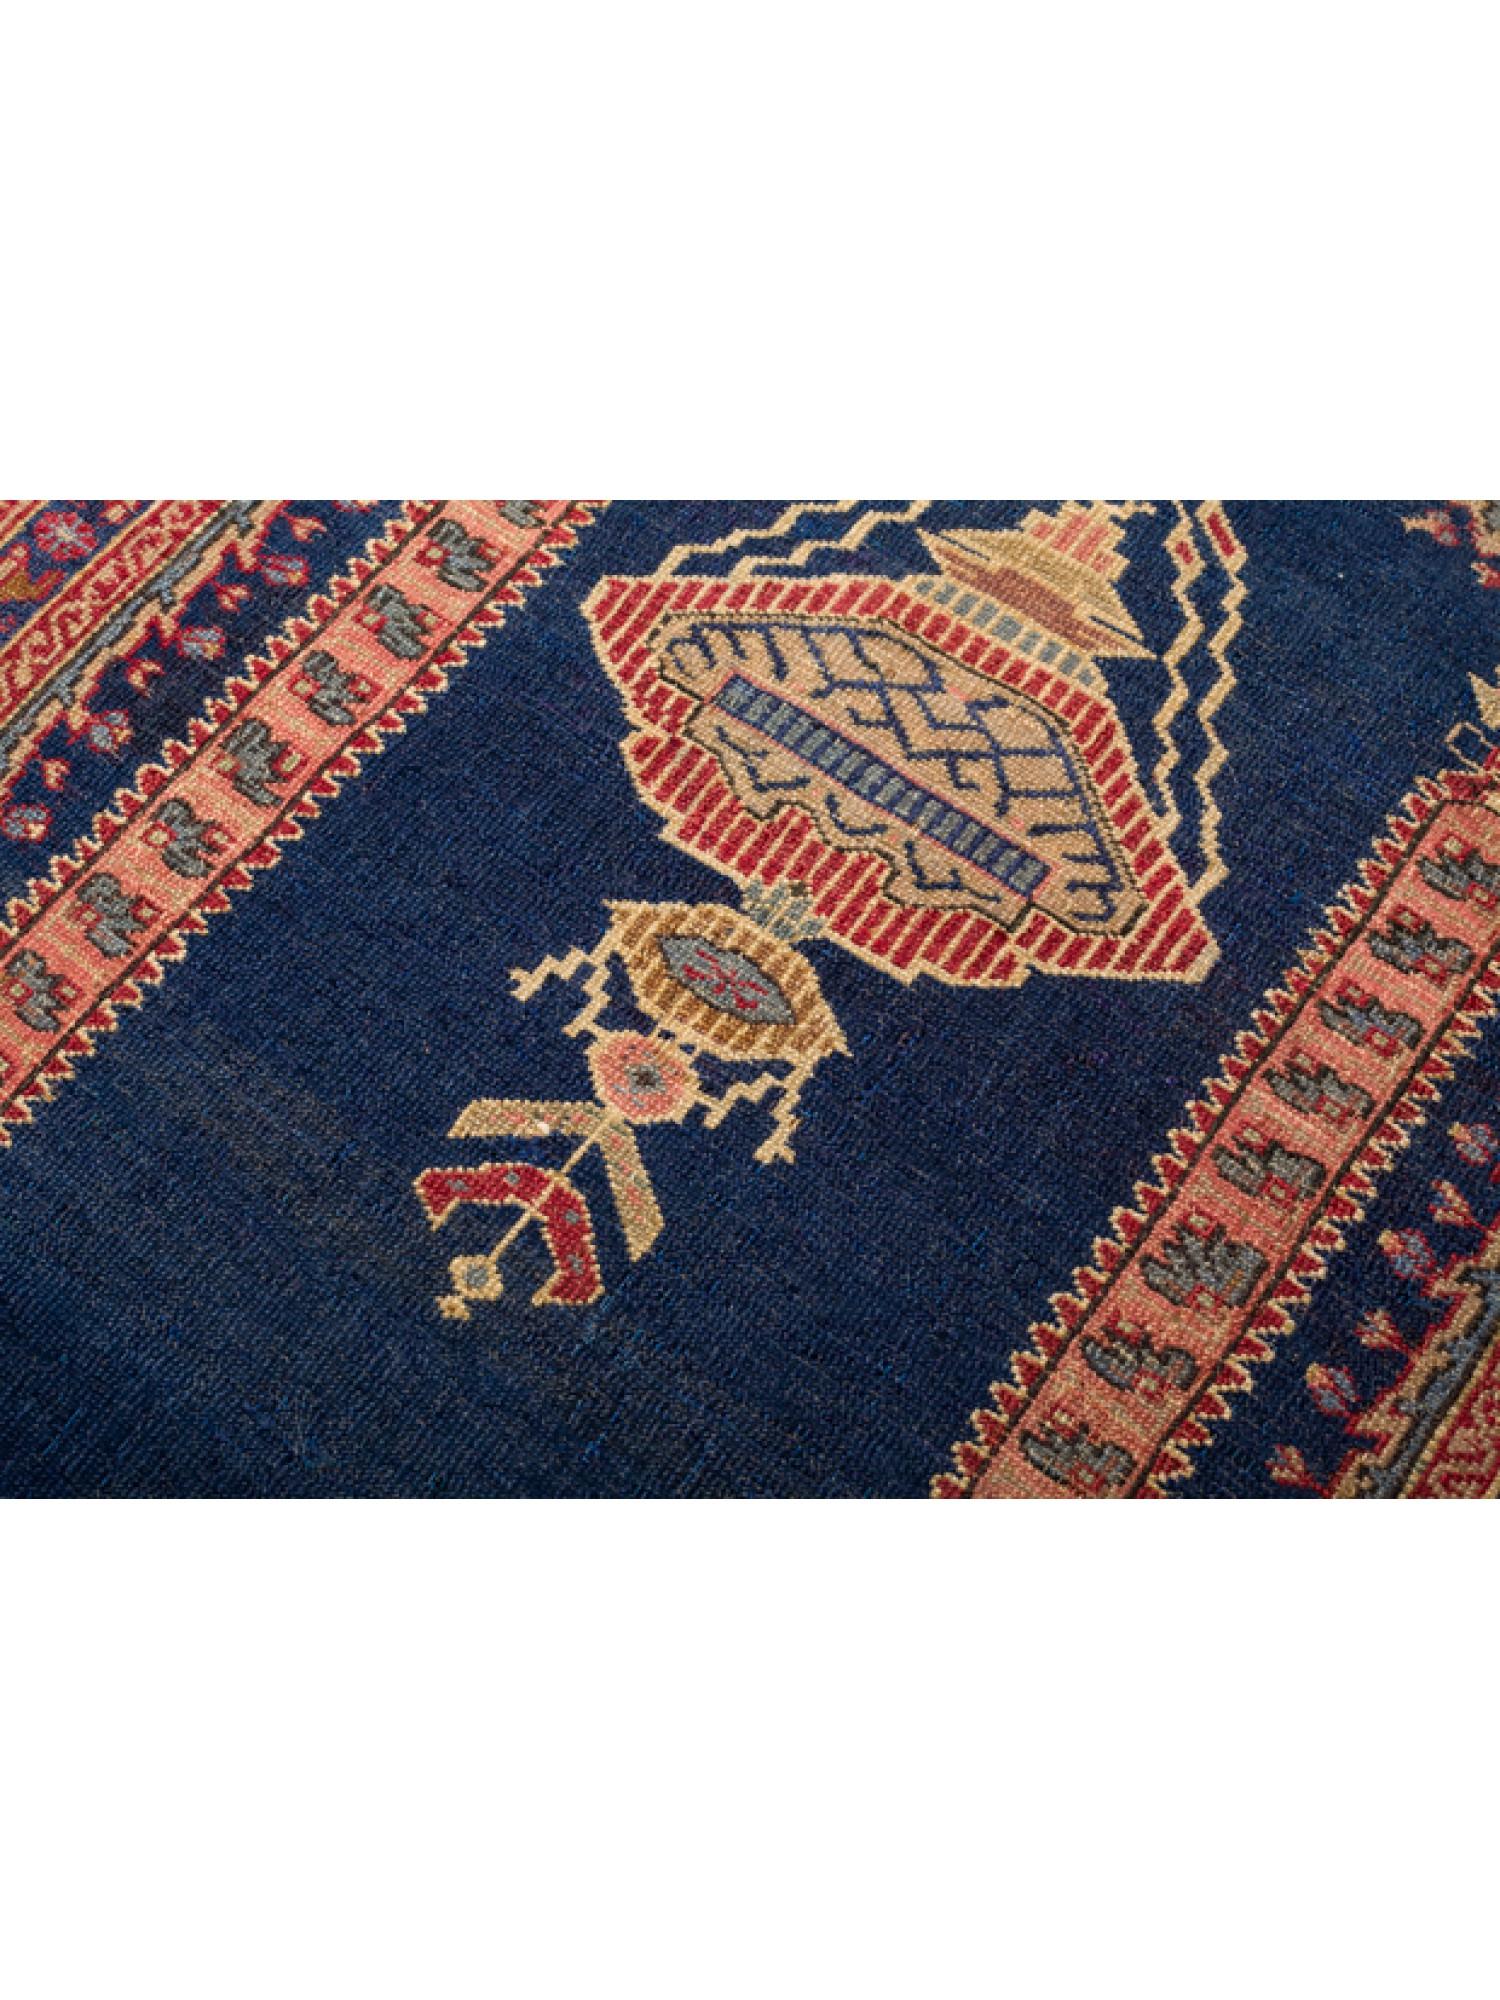 Oushak Antique Kula Prayer Rug Western Anatolian Turkish Mihrab Carpet Rare Design For Sale